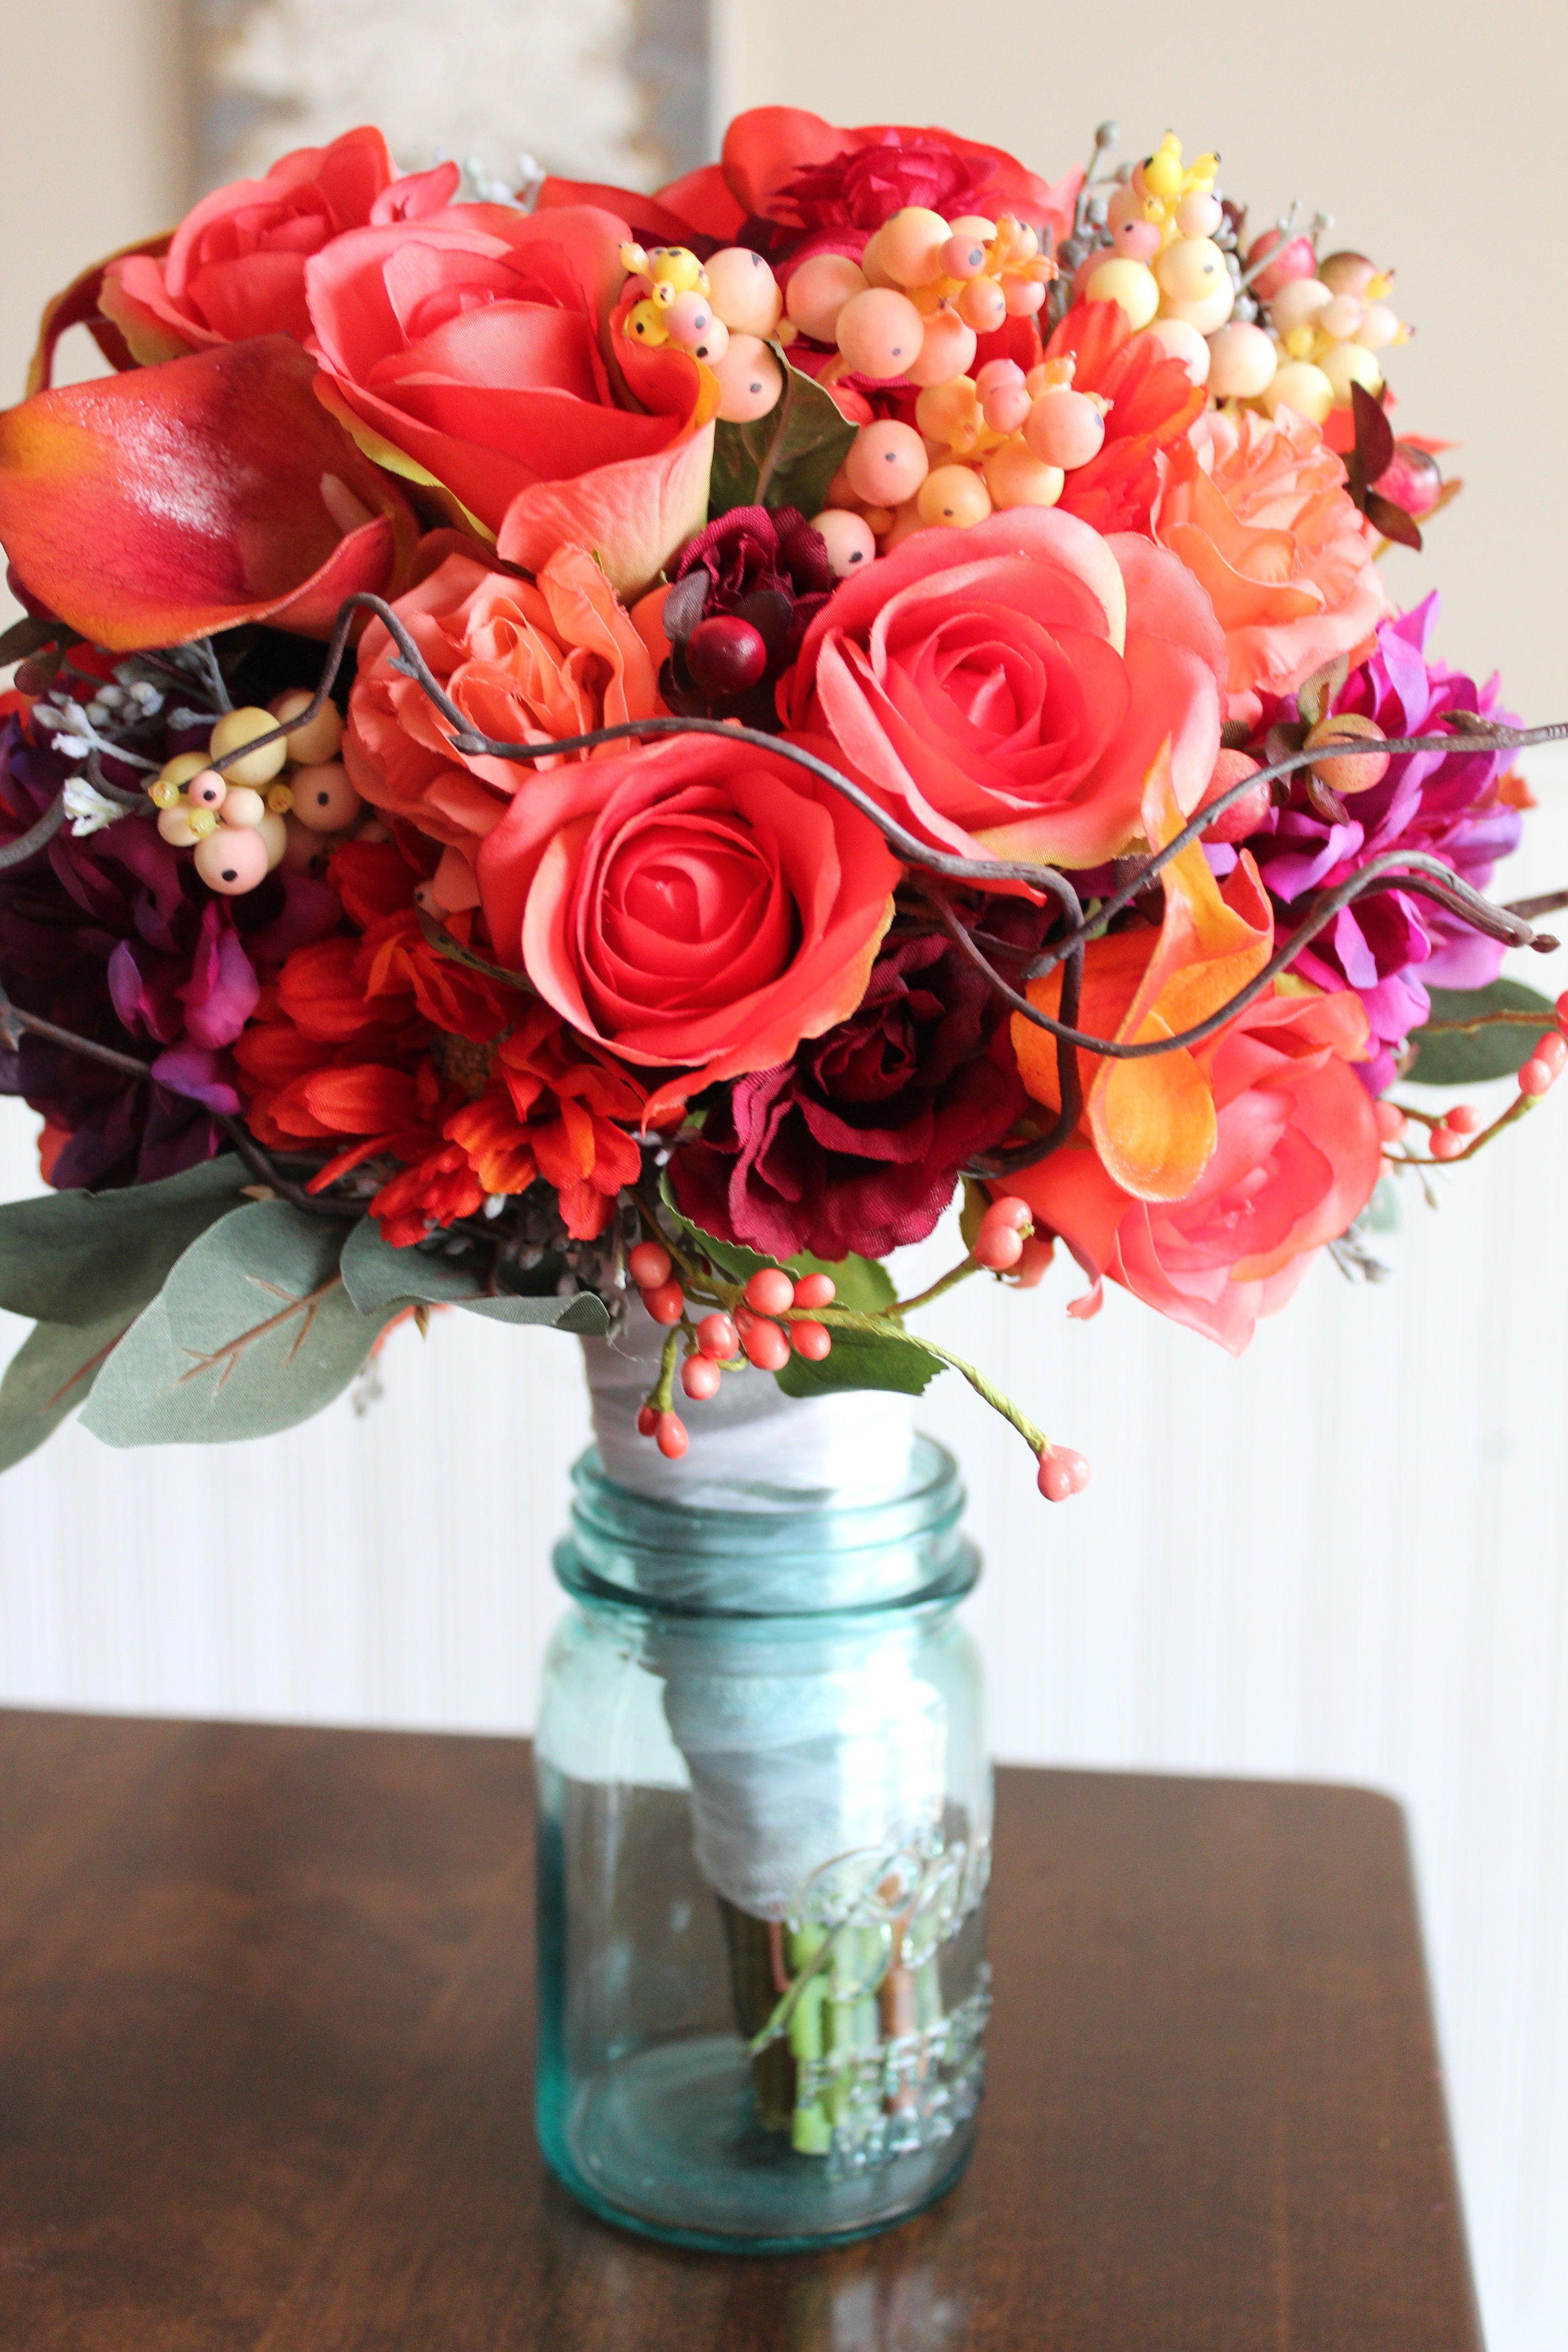 Peach Coral Gerbera Daisy Bridal Bouquet, Artificial Wedding Flowers, Silk  Wedding Bouquets